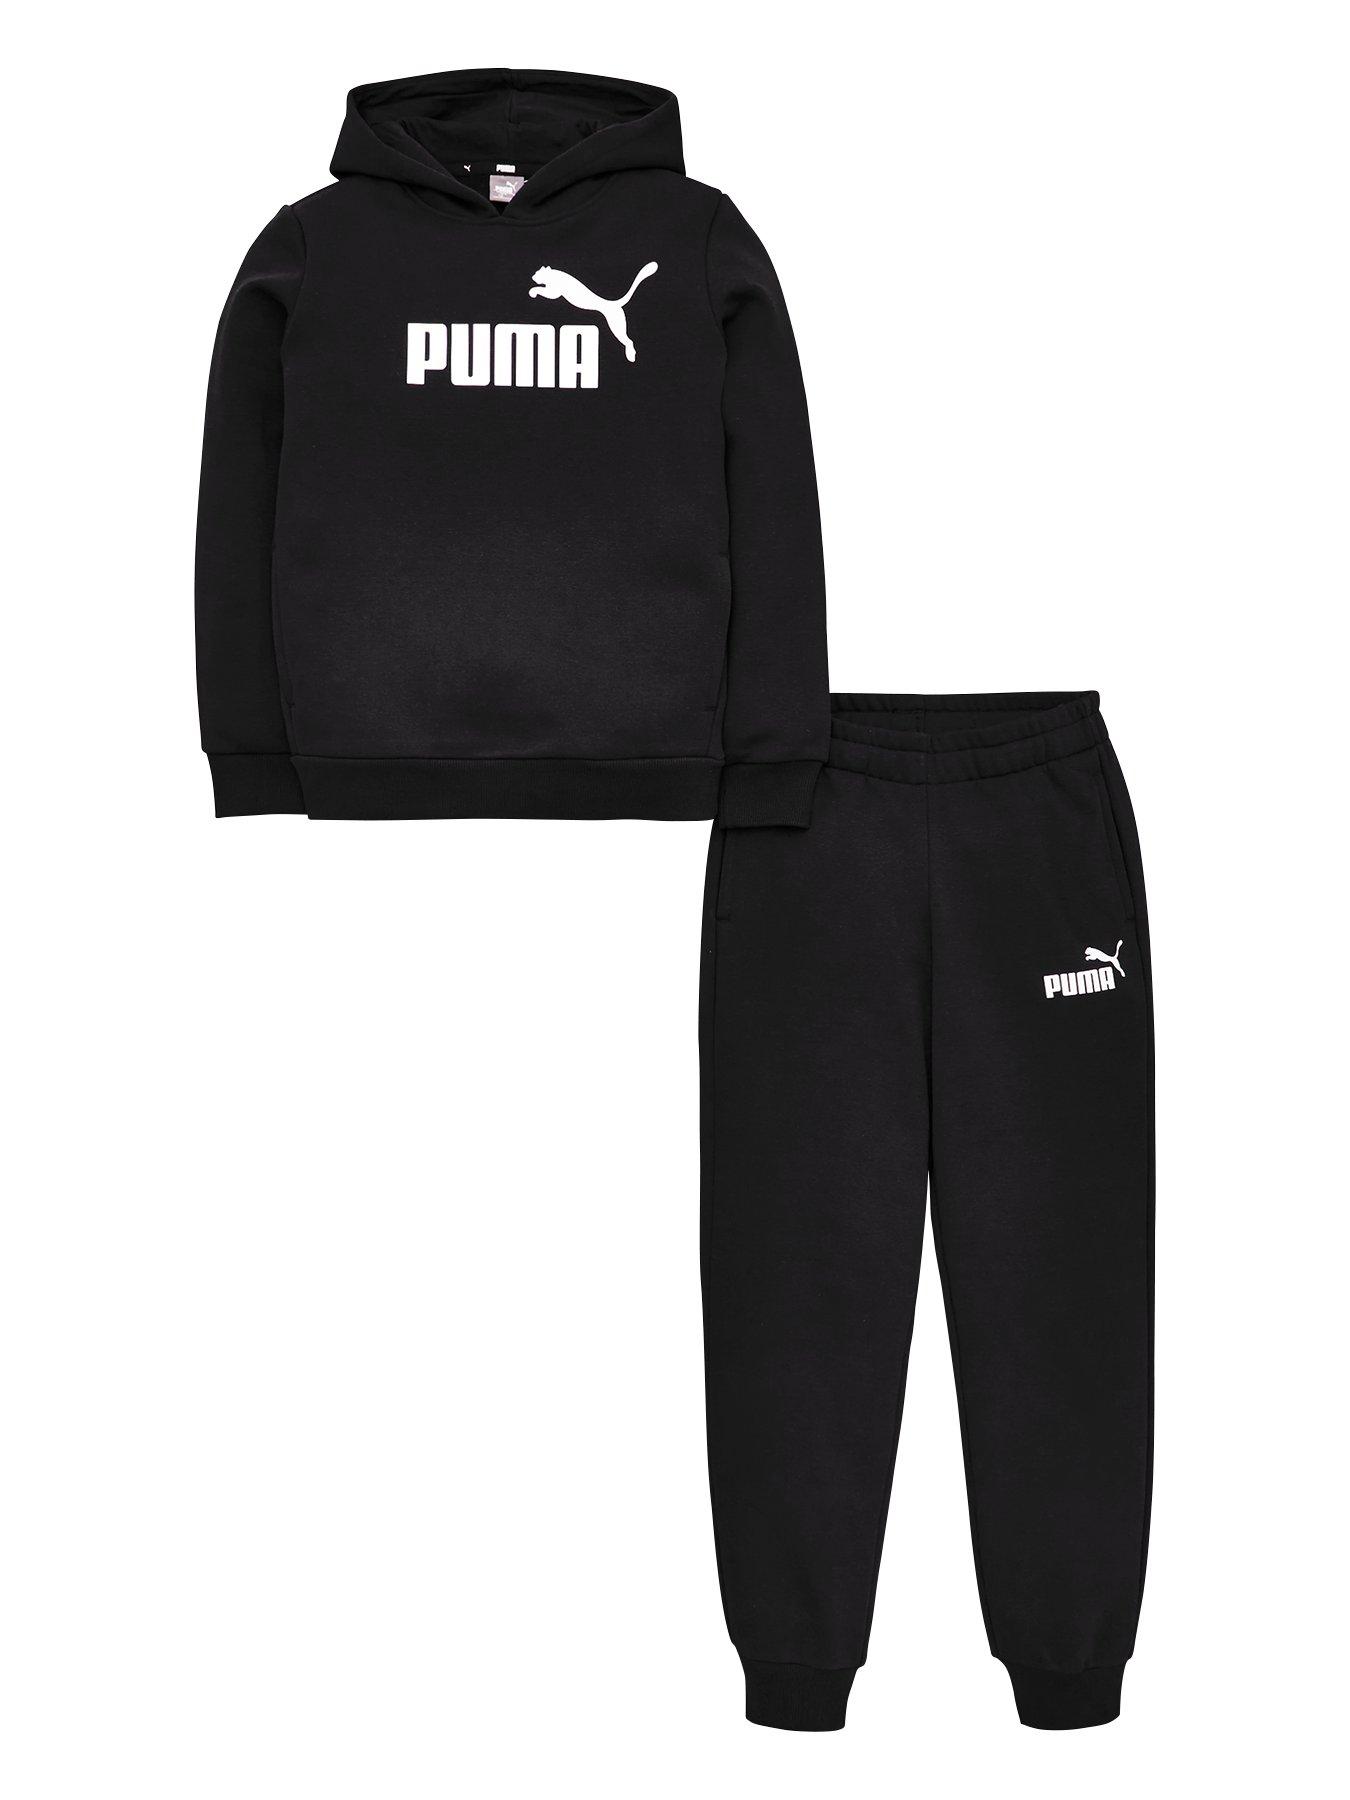 Black | Puma | Boys clothes | Child 